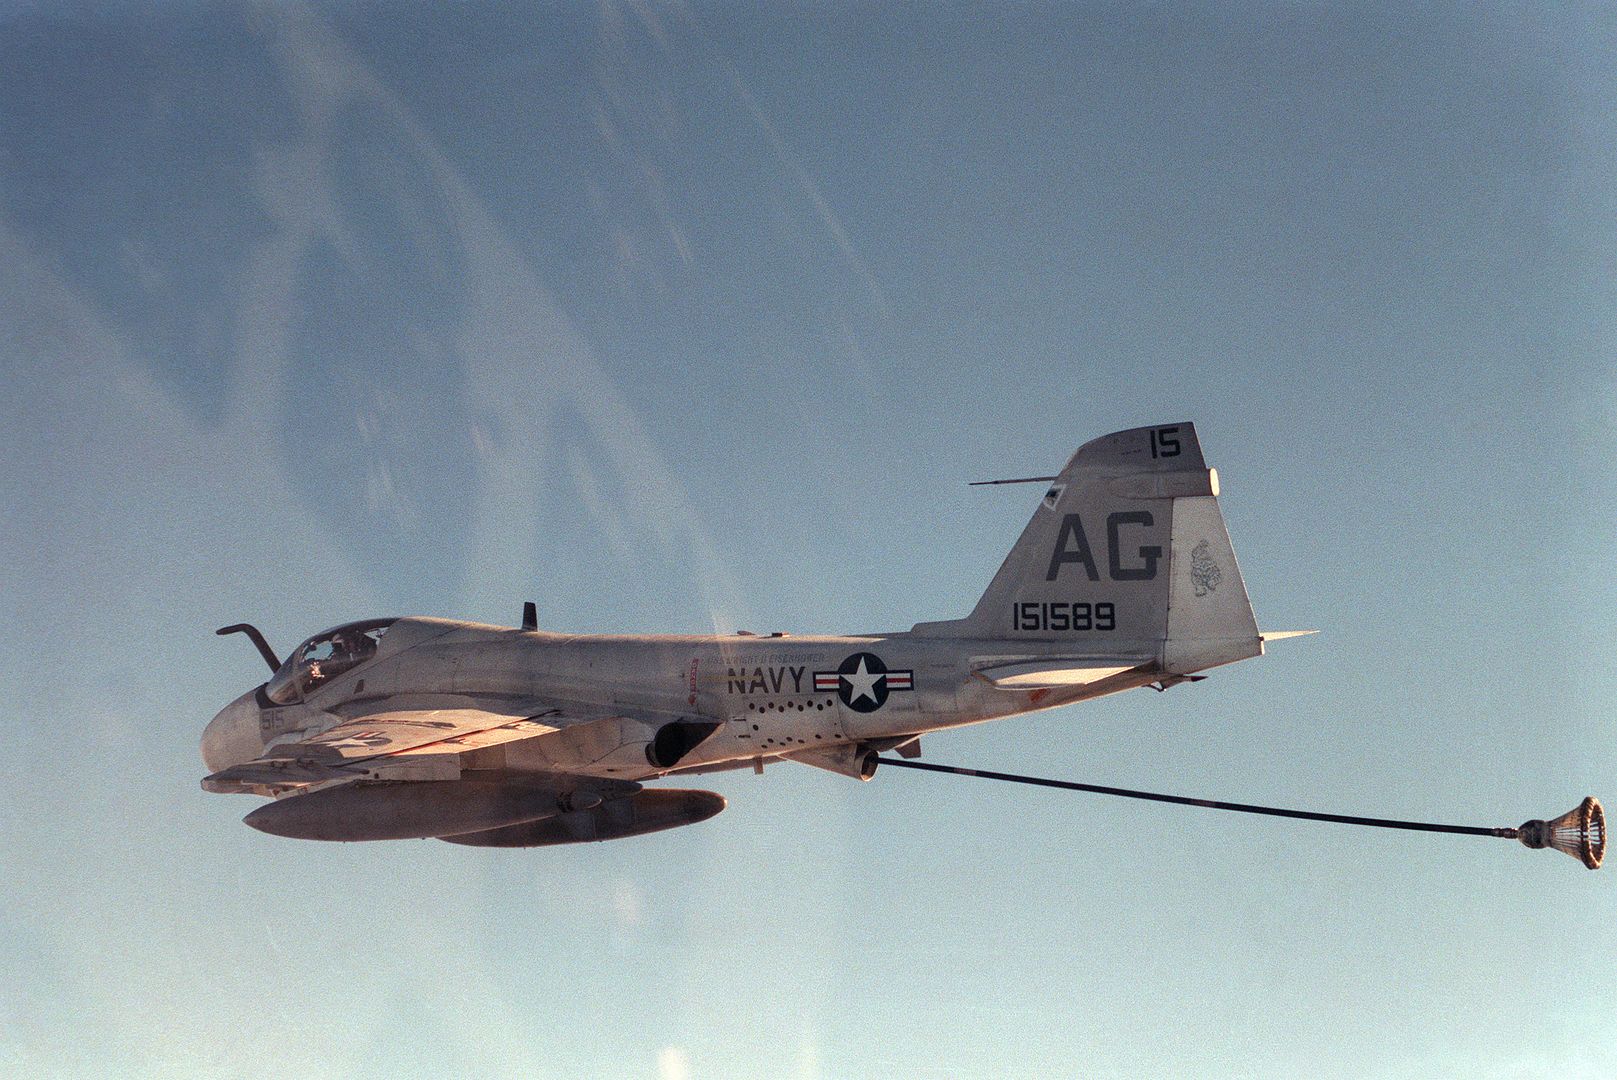 An Air To Air Left Rear View Of A KA 6D Intruder Aircraft Trailing A Refueling Drogue